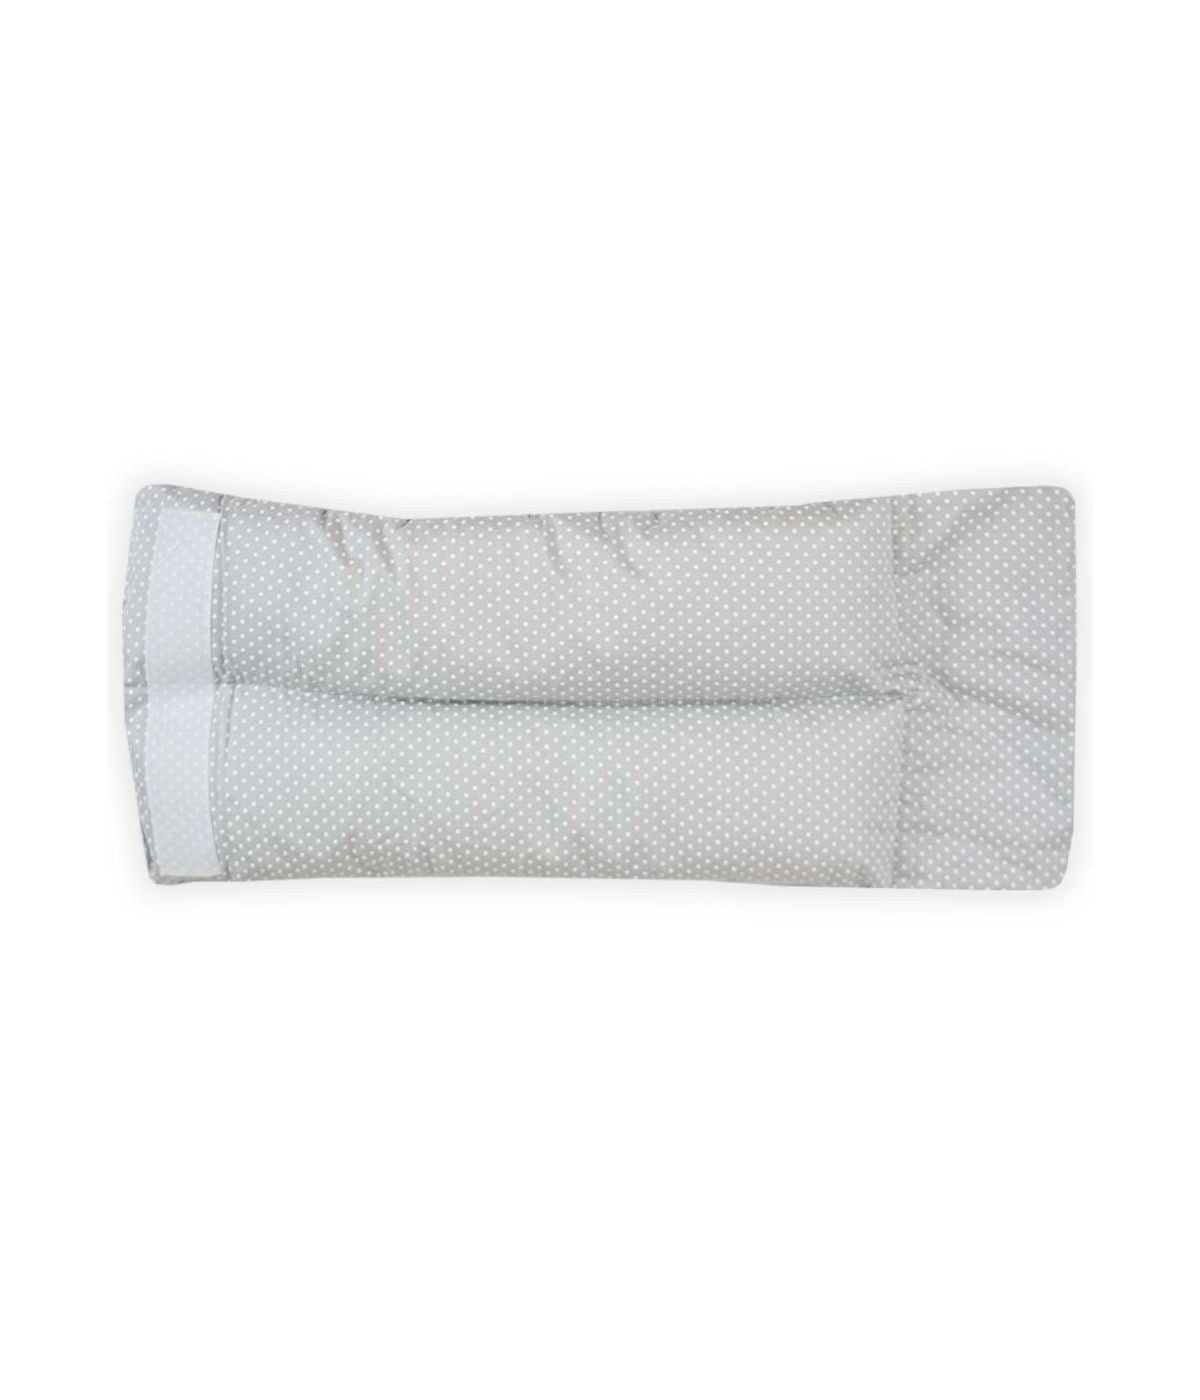 Serenity Gray Comfy Cradle Gray/White